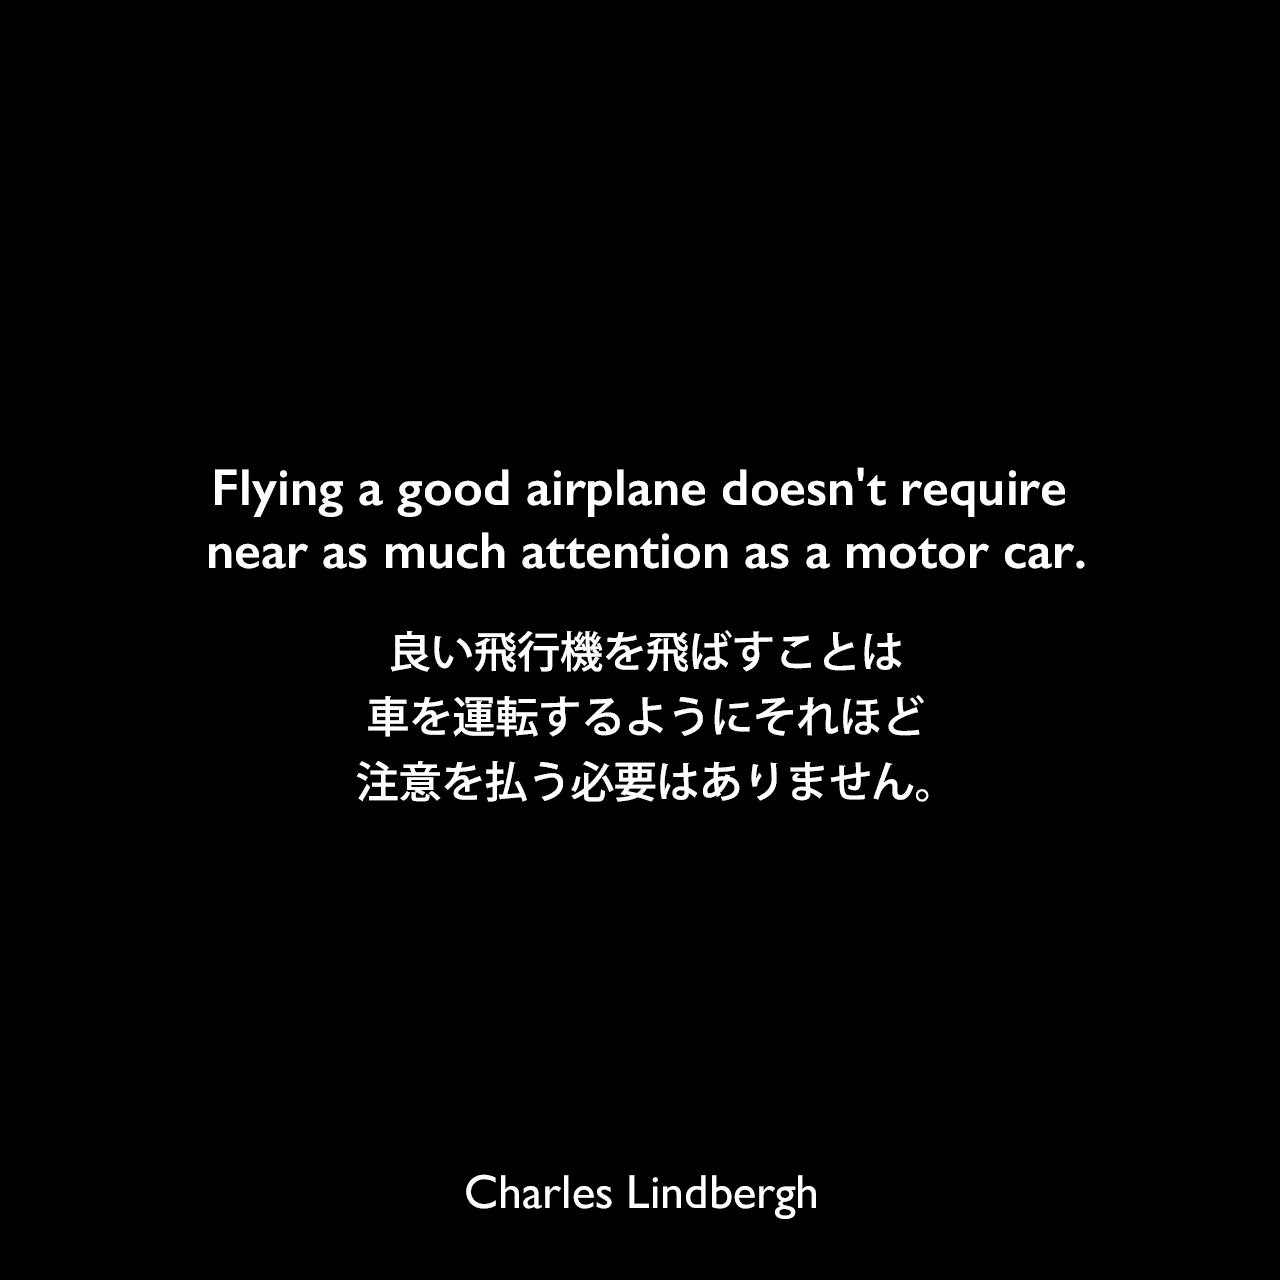 Flying a good airplane doesn't require near as much attention as a motor car.良い飛行機を飛ばすことは、車を運転するようにそれほど注意を払う必要はありません。Charles Lindbergh